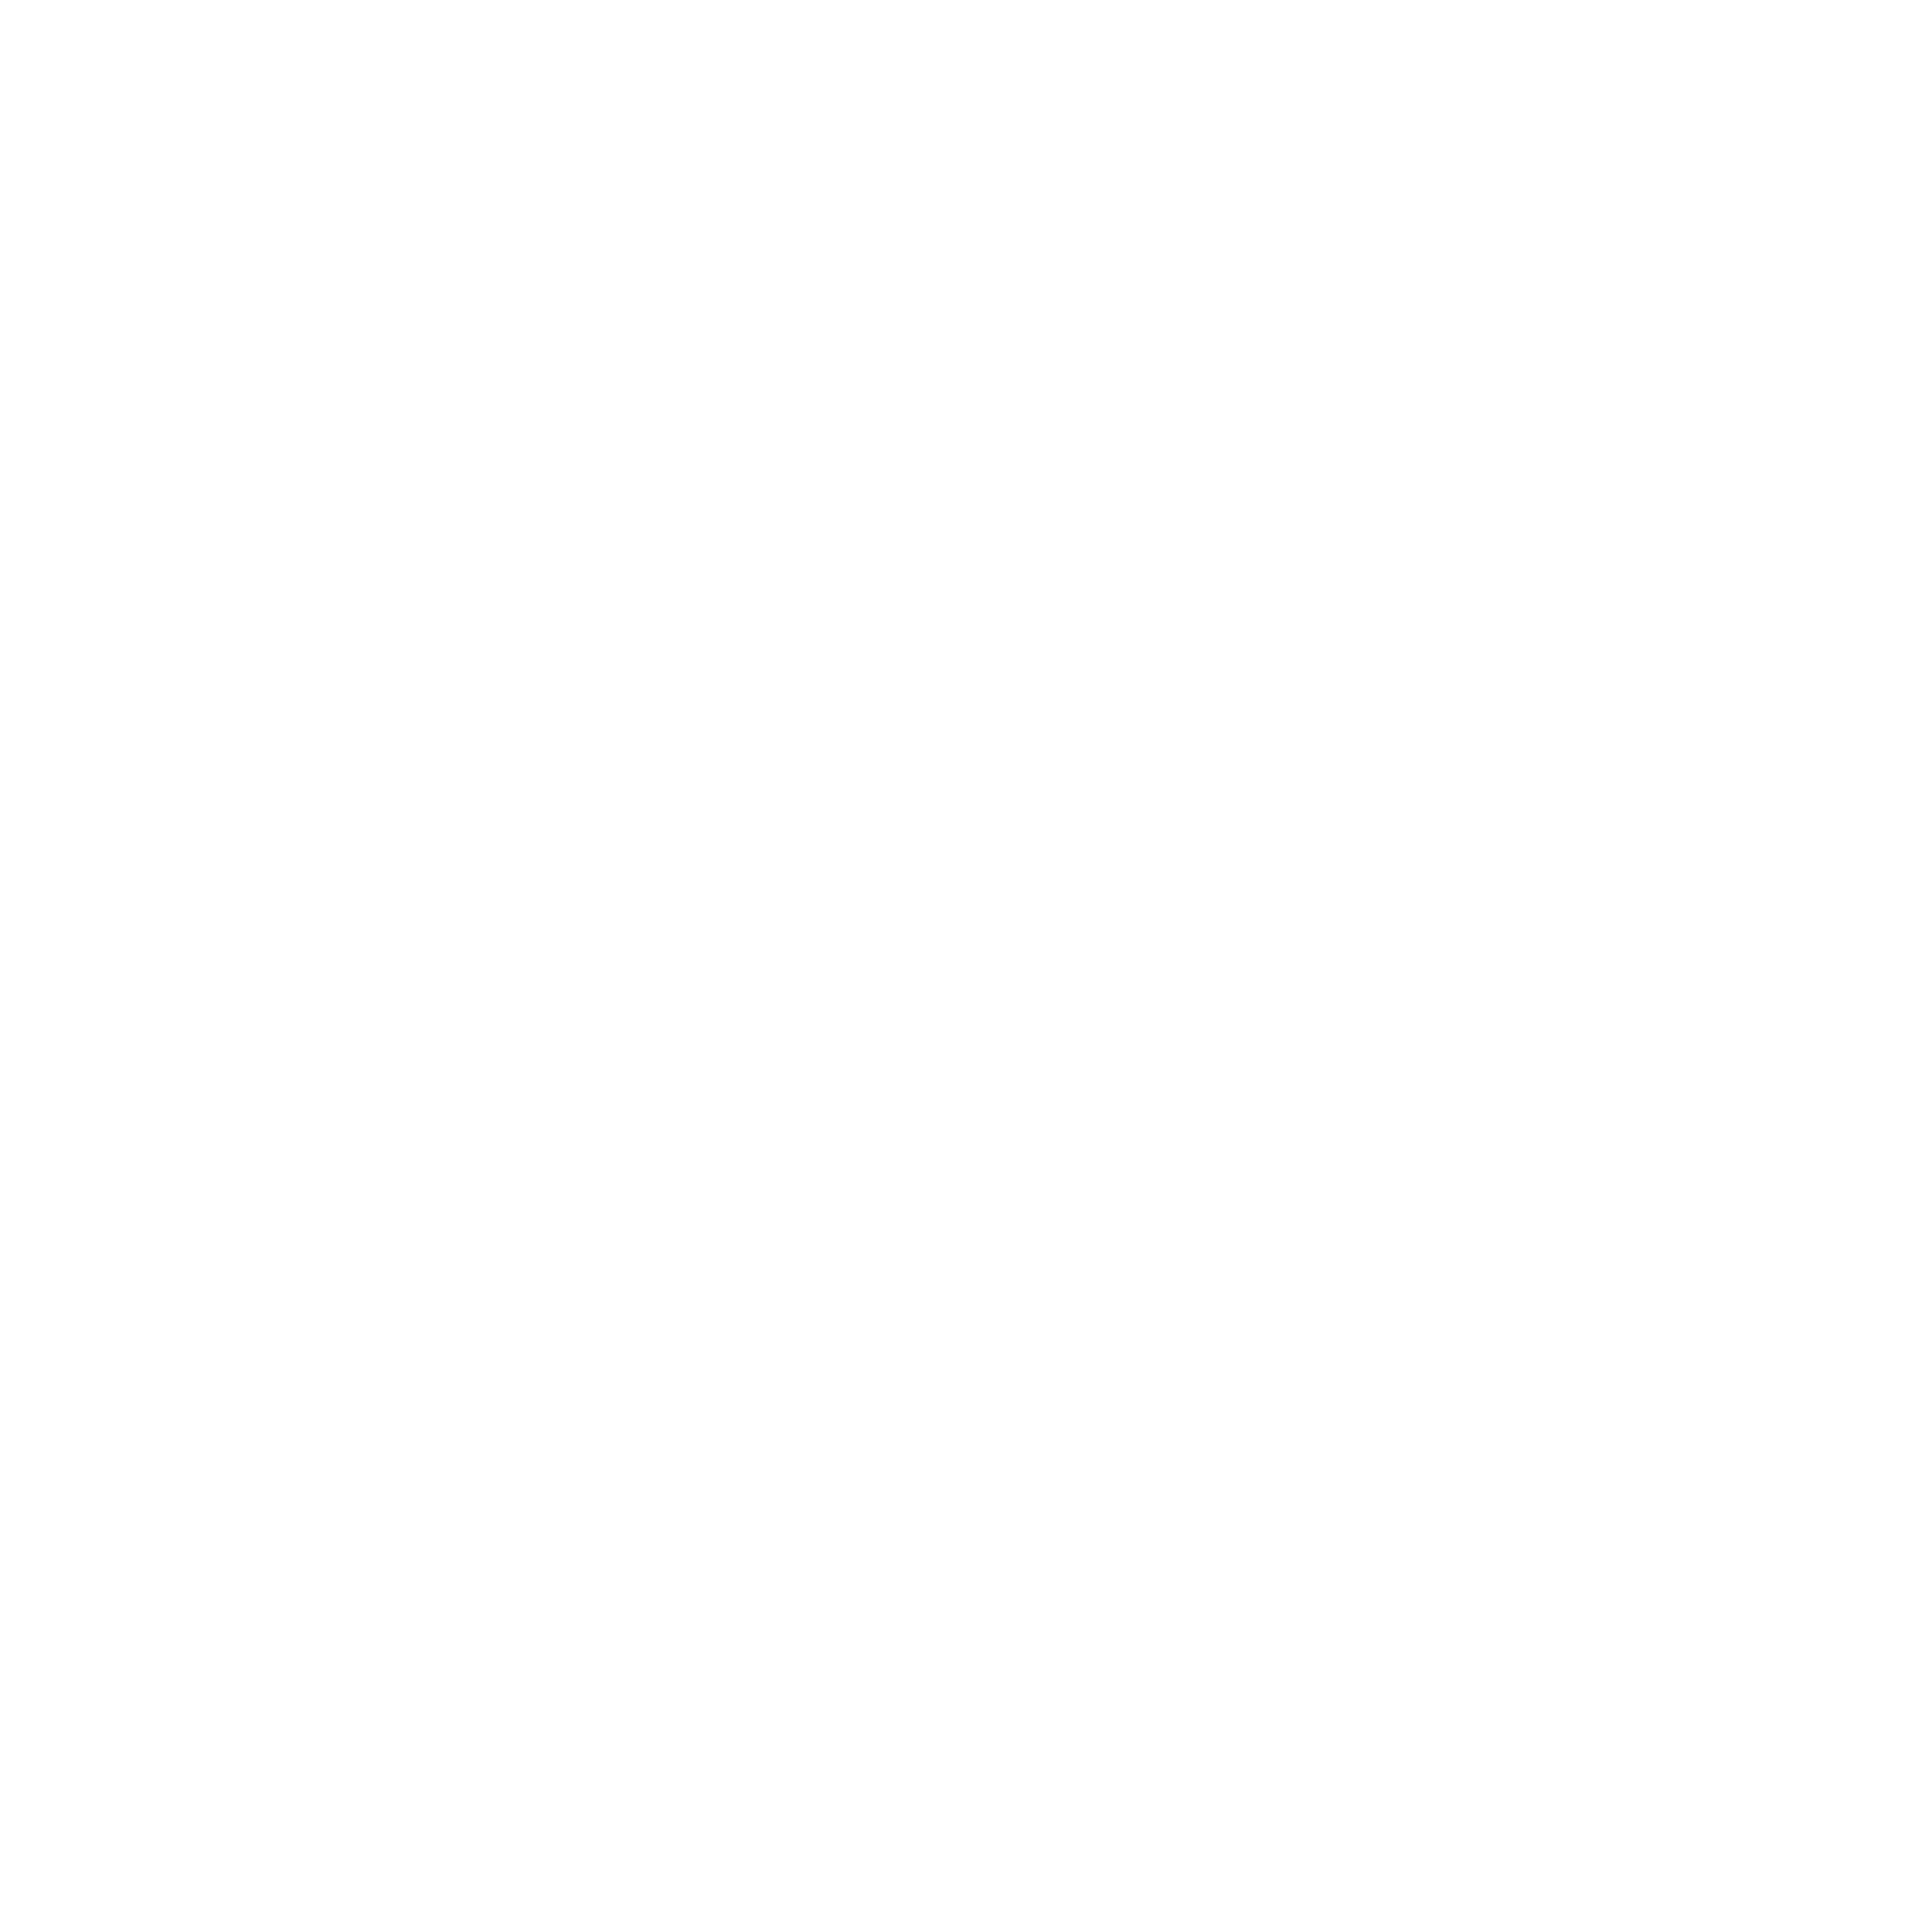 ROOFTOP LIVE